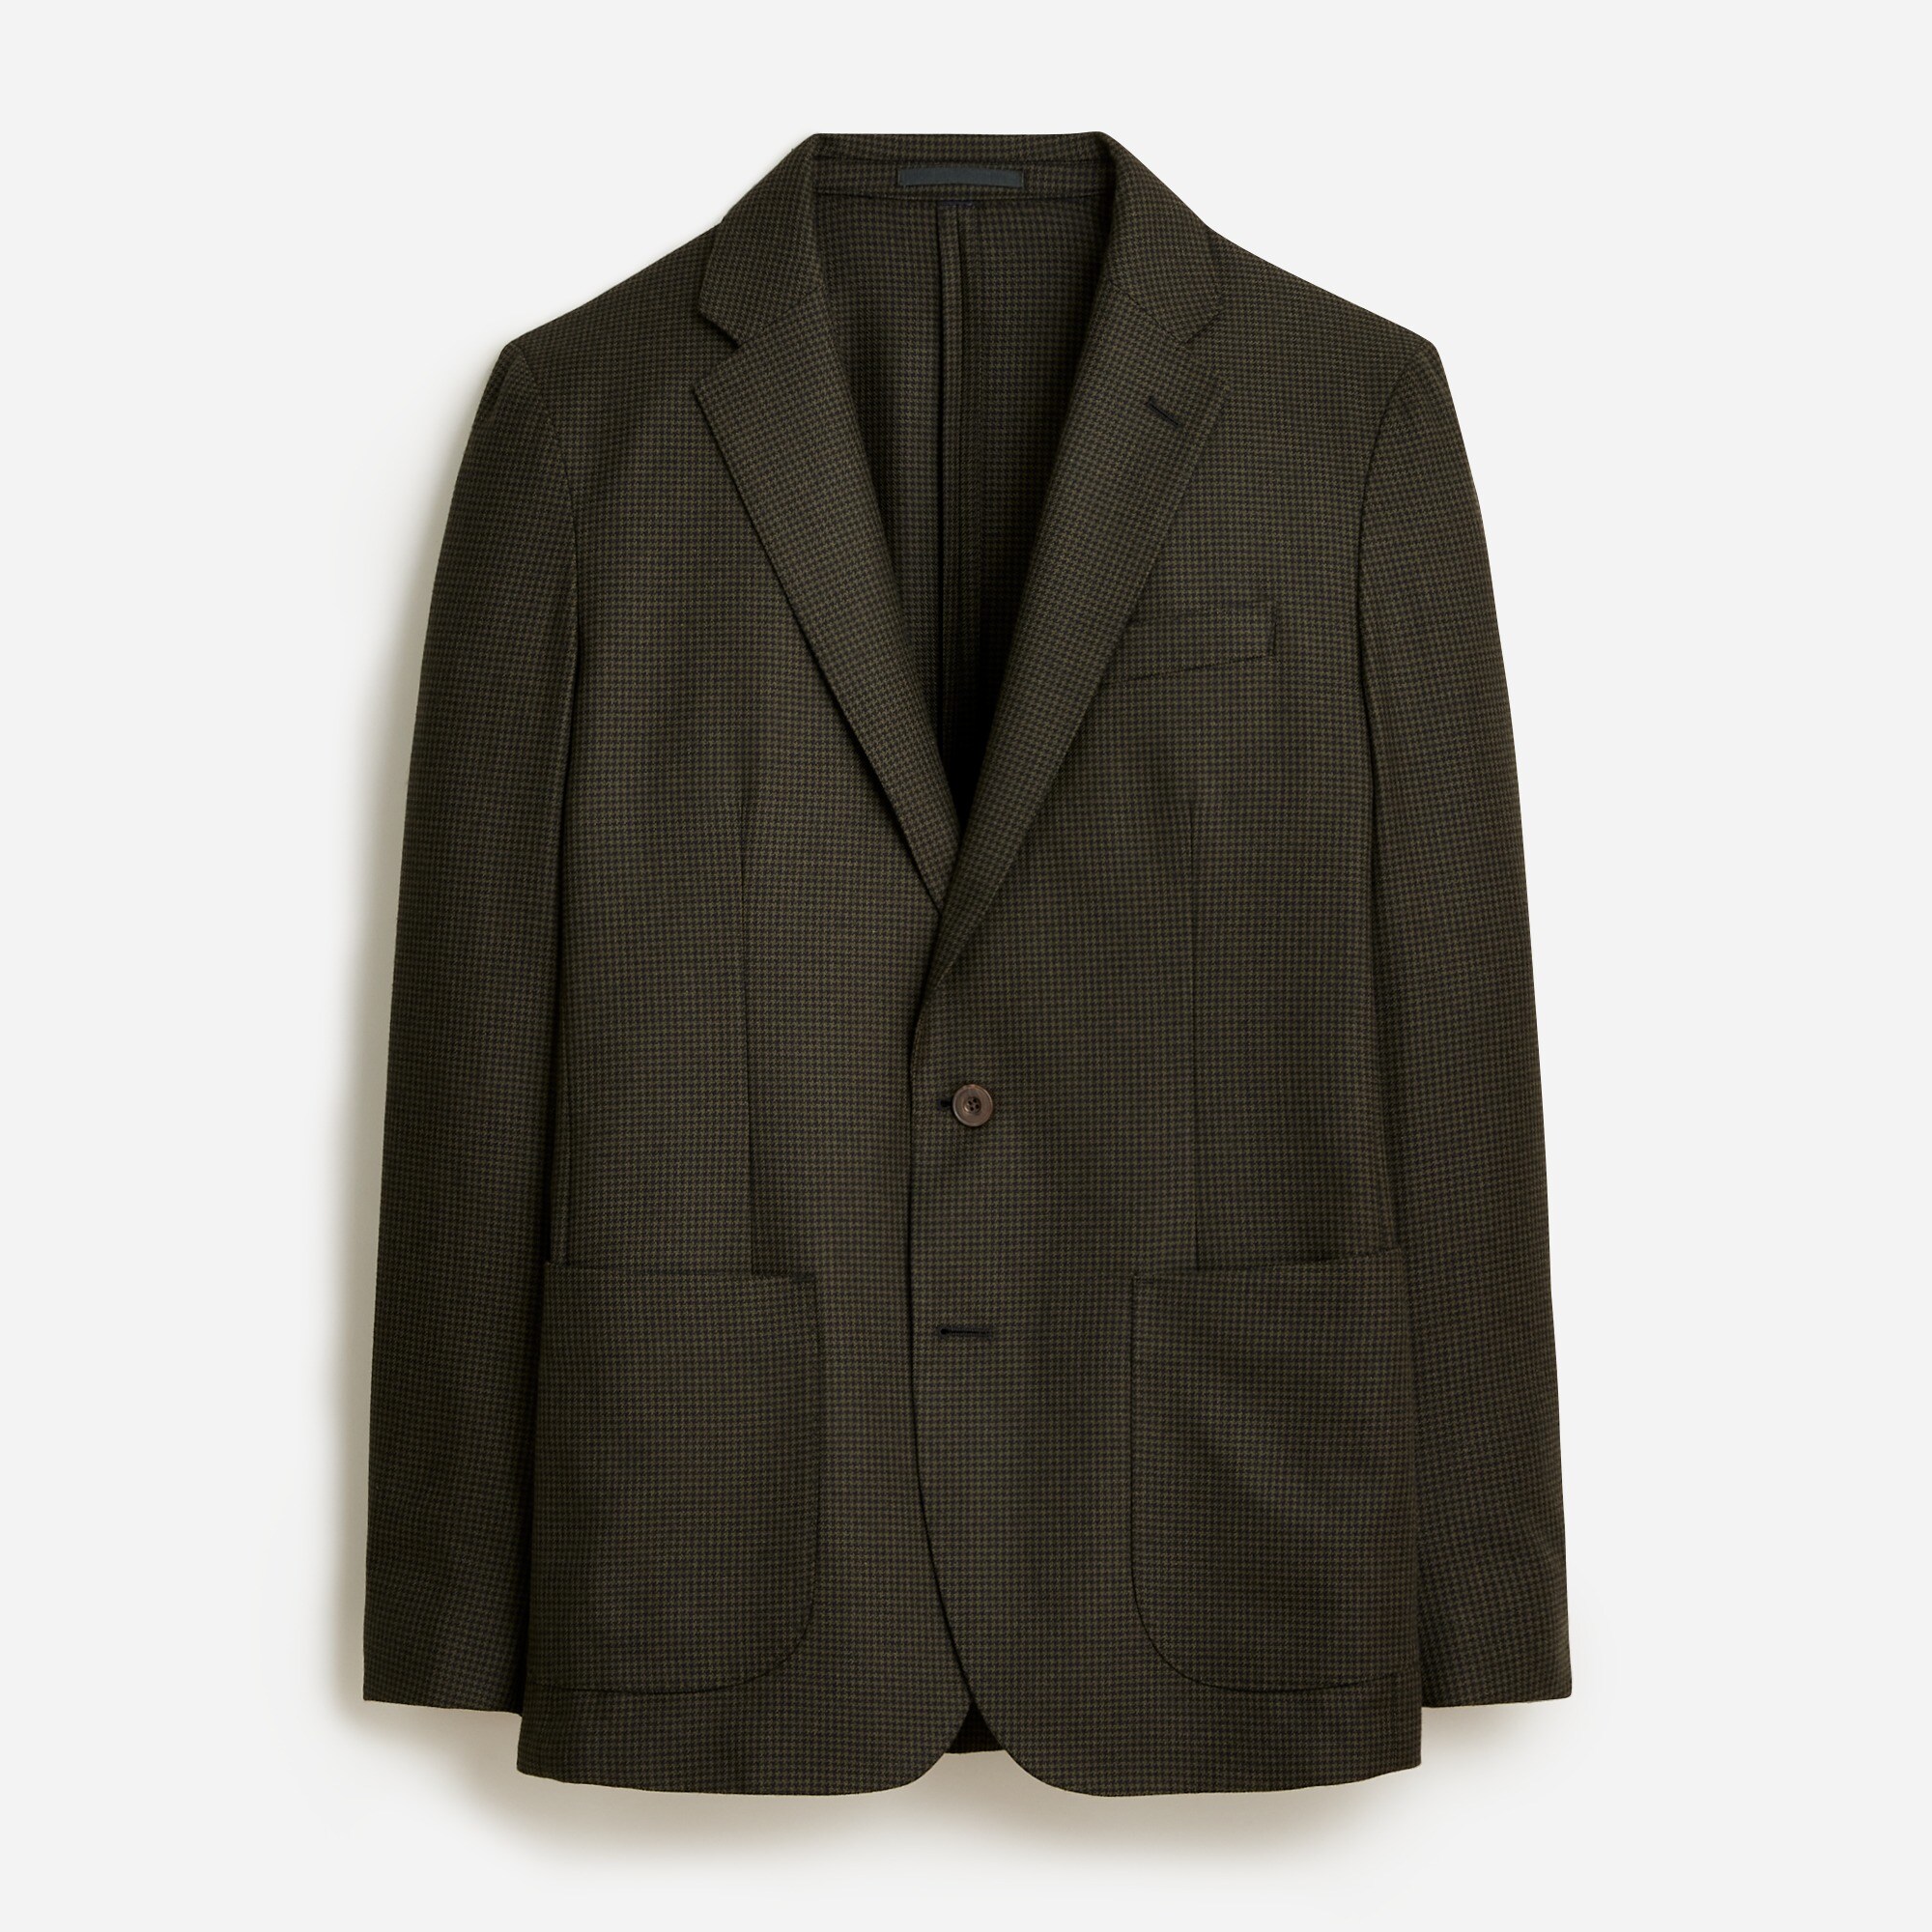  Ludlow Slim-fit blazer in English cotton-wool blend